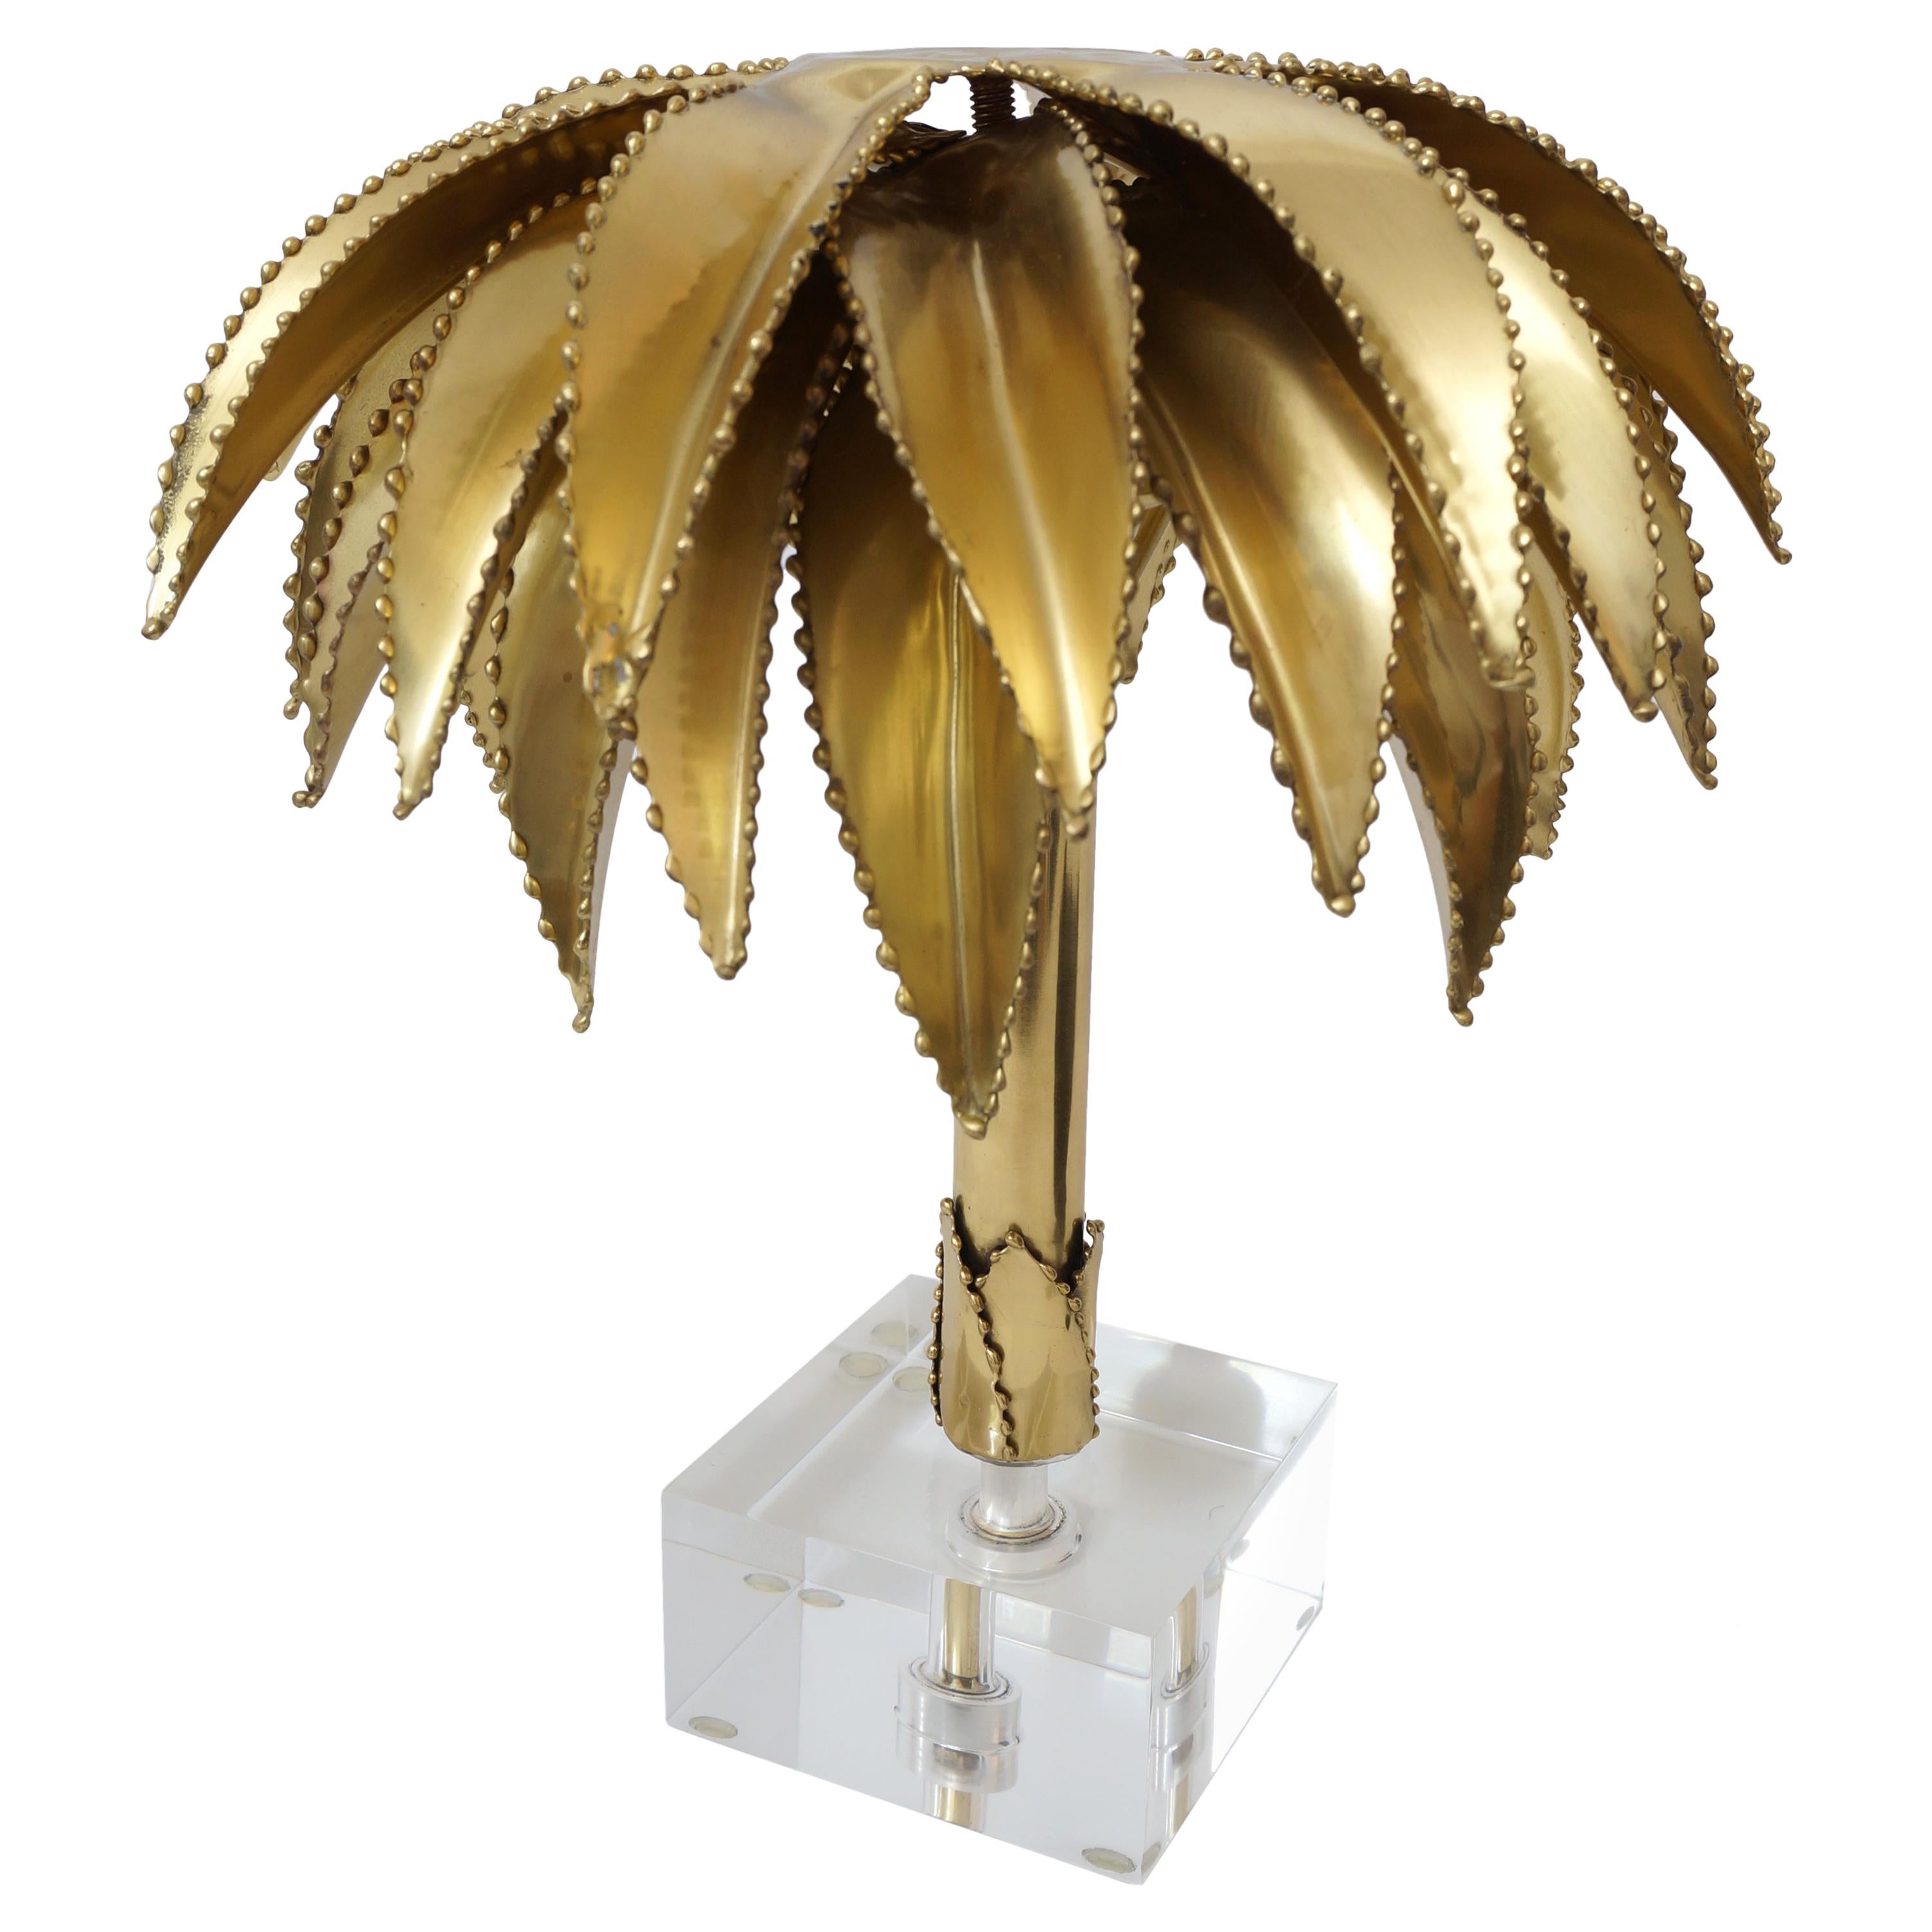 Royal Palm Tree by Maison Jansen